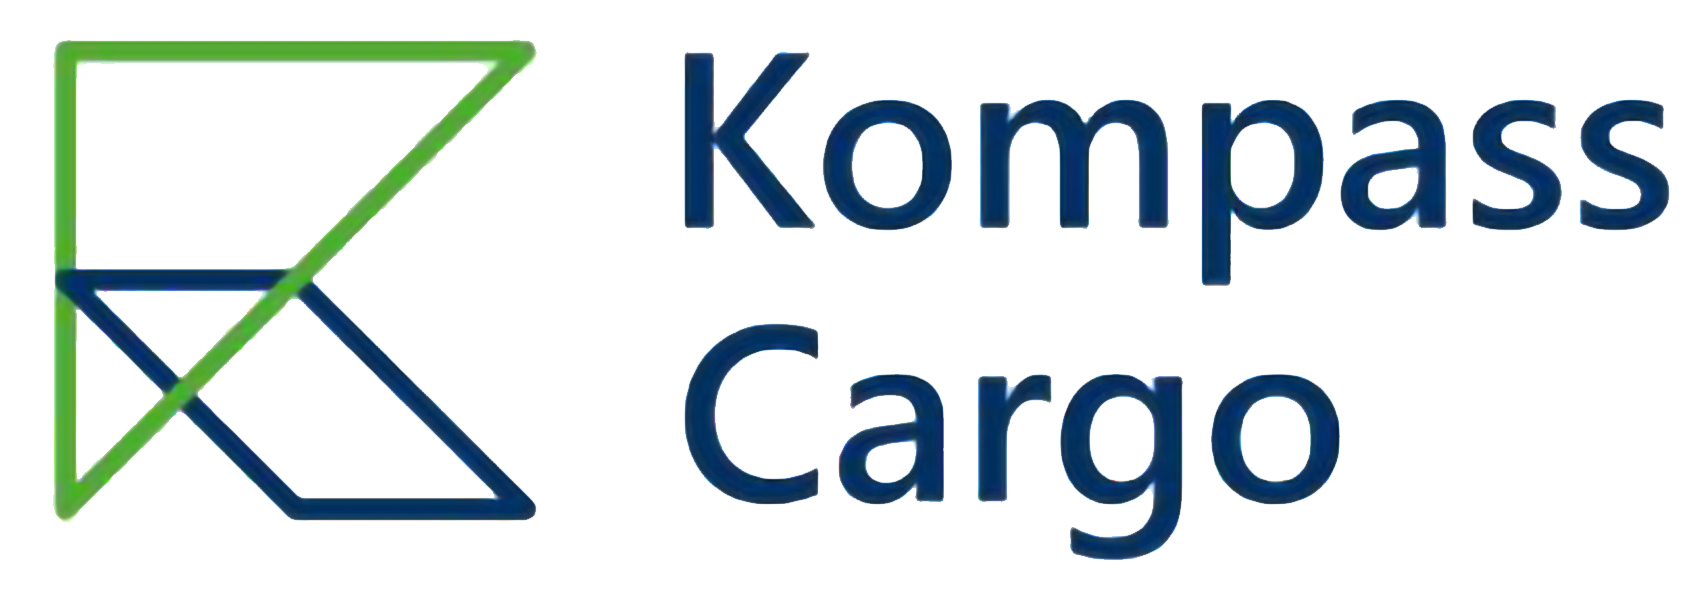 Kompass Cargo Logo